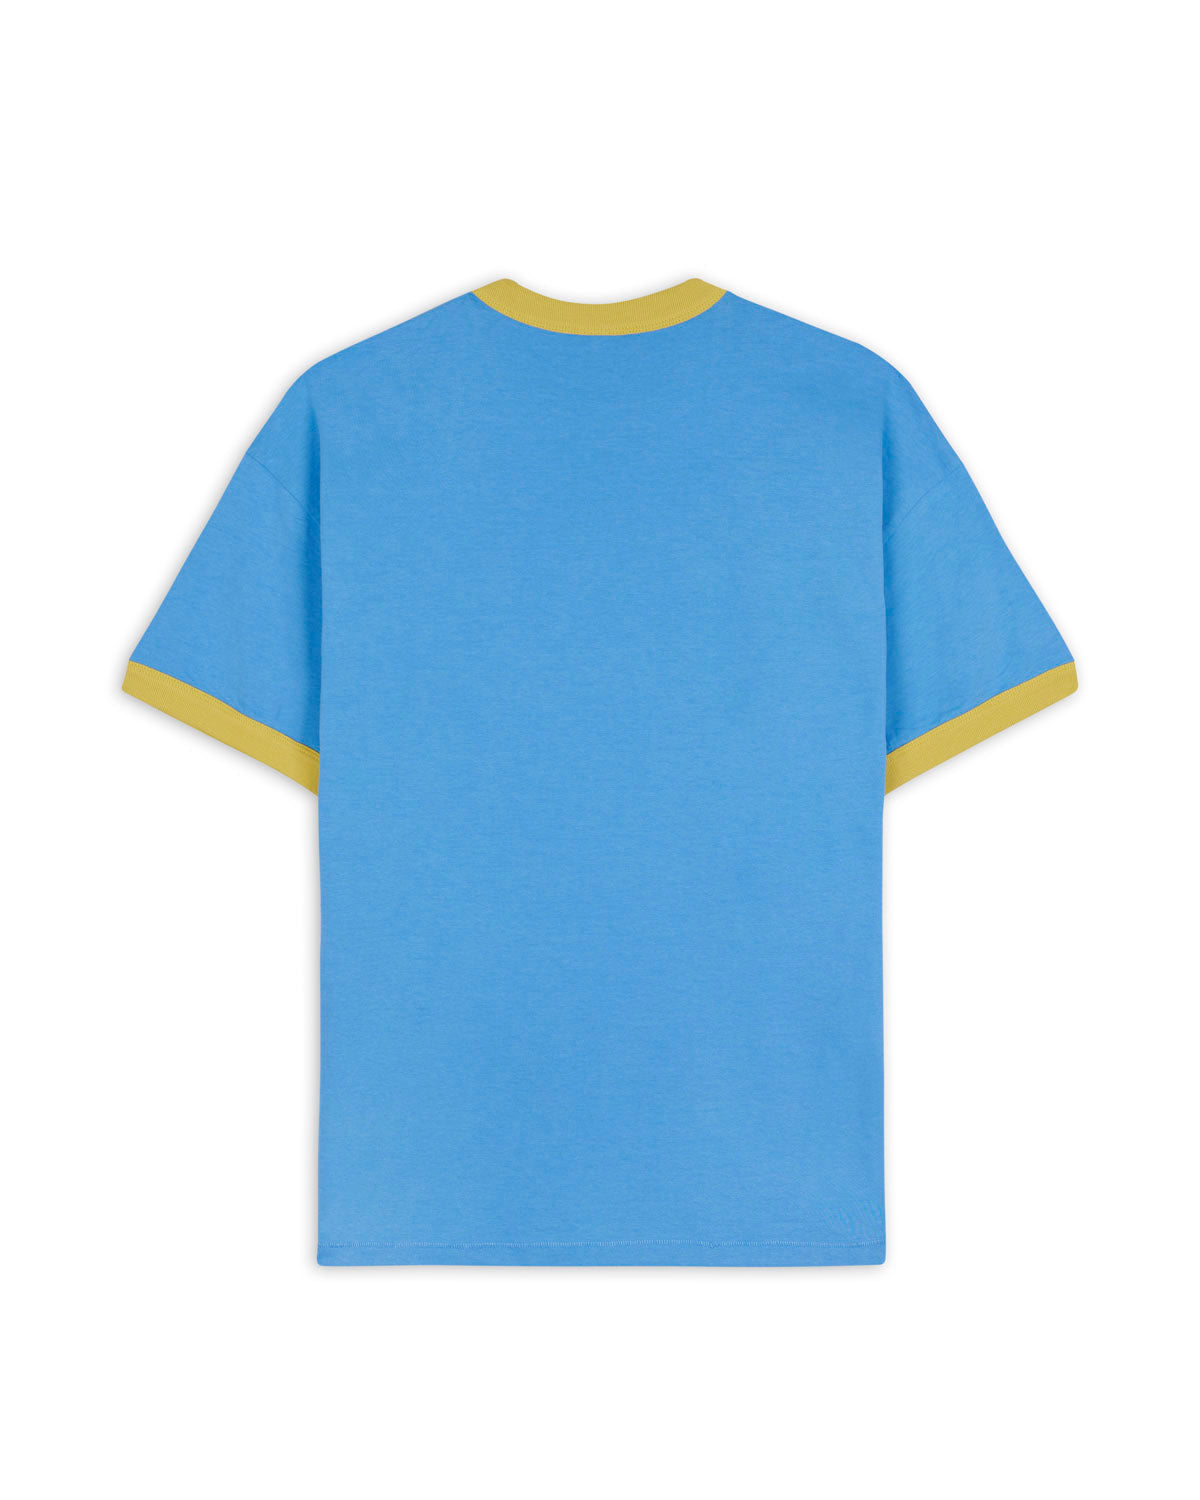 Brain Dead x Minions Short Sleeve Ringer T-Shirt - Blue